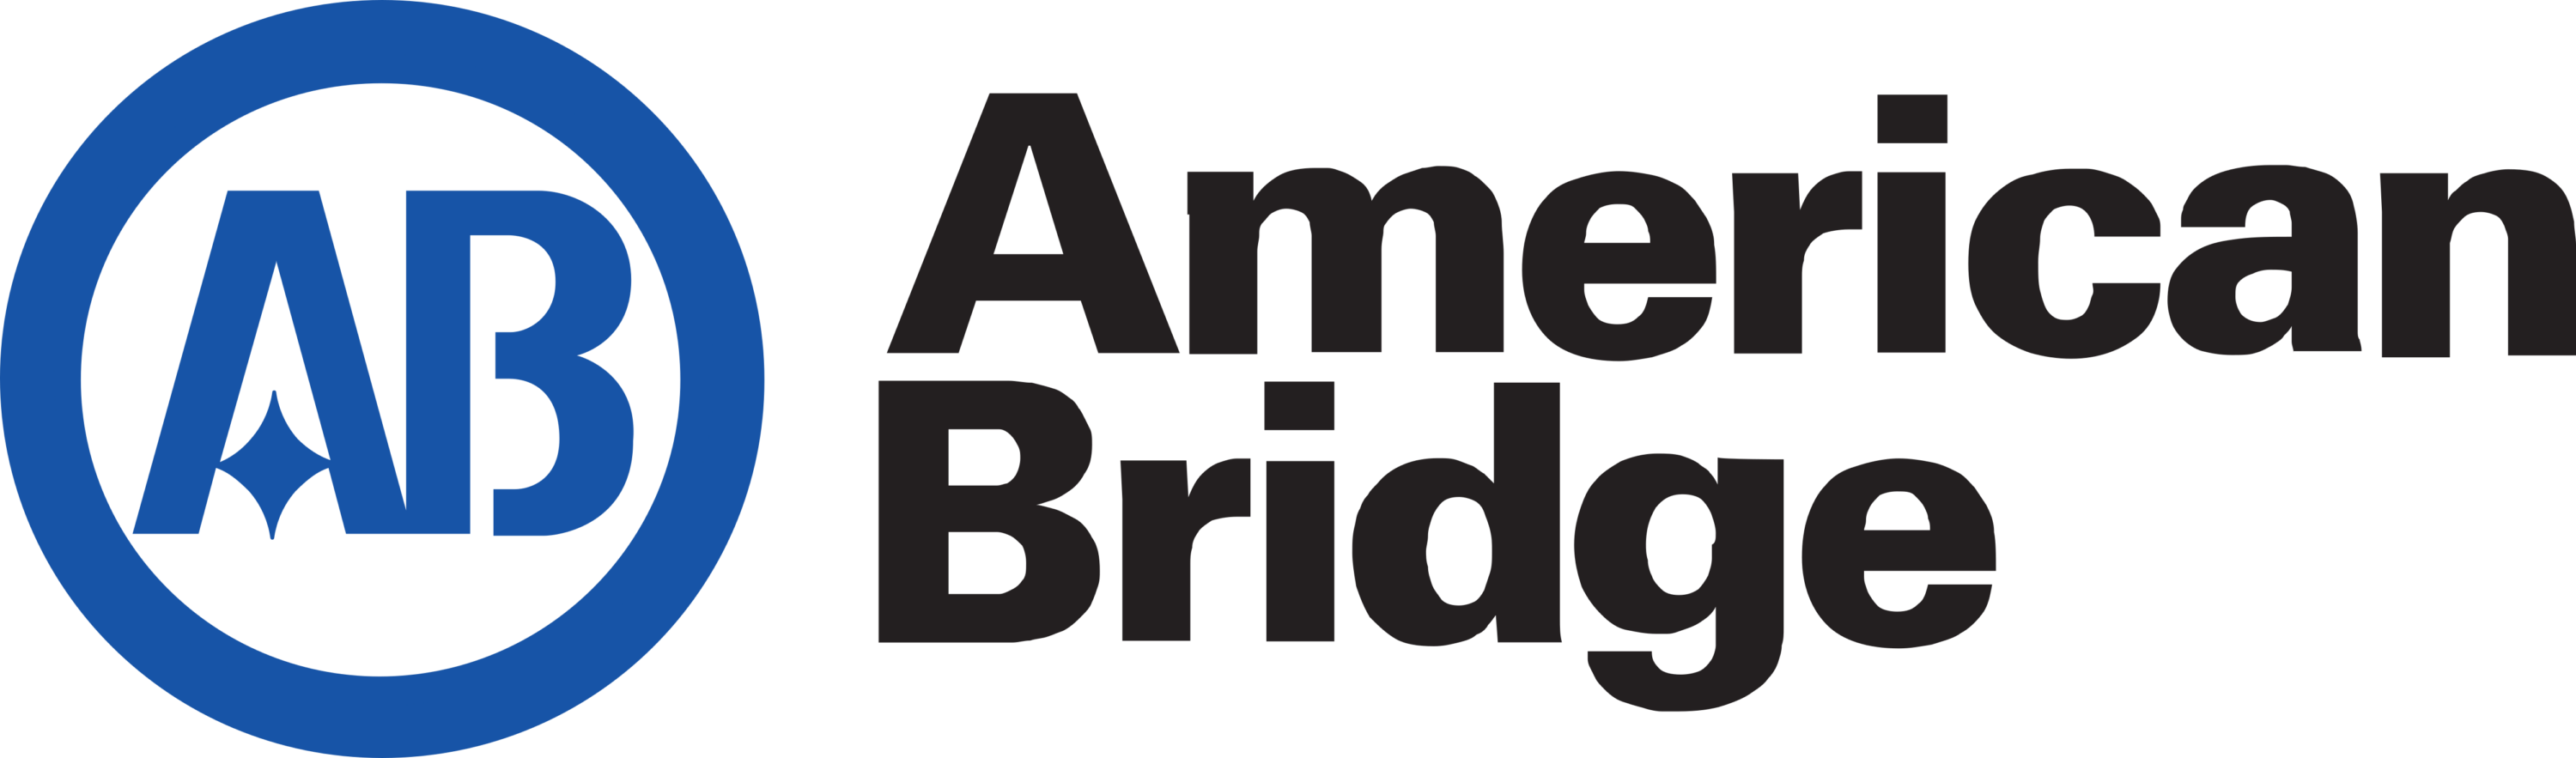 American Bridge Company Logo